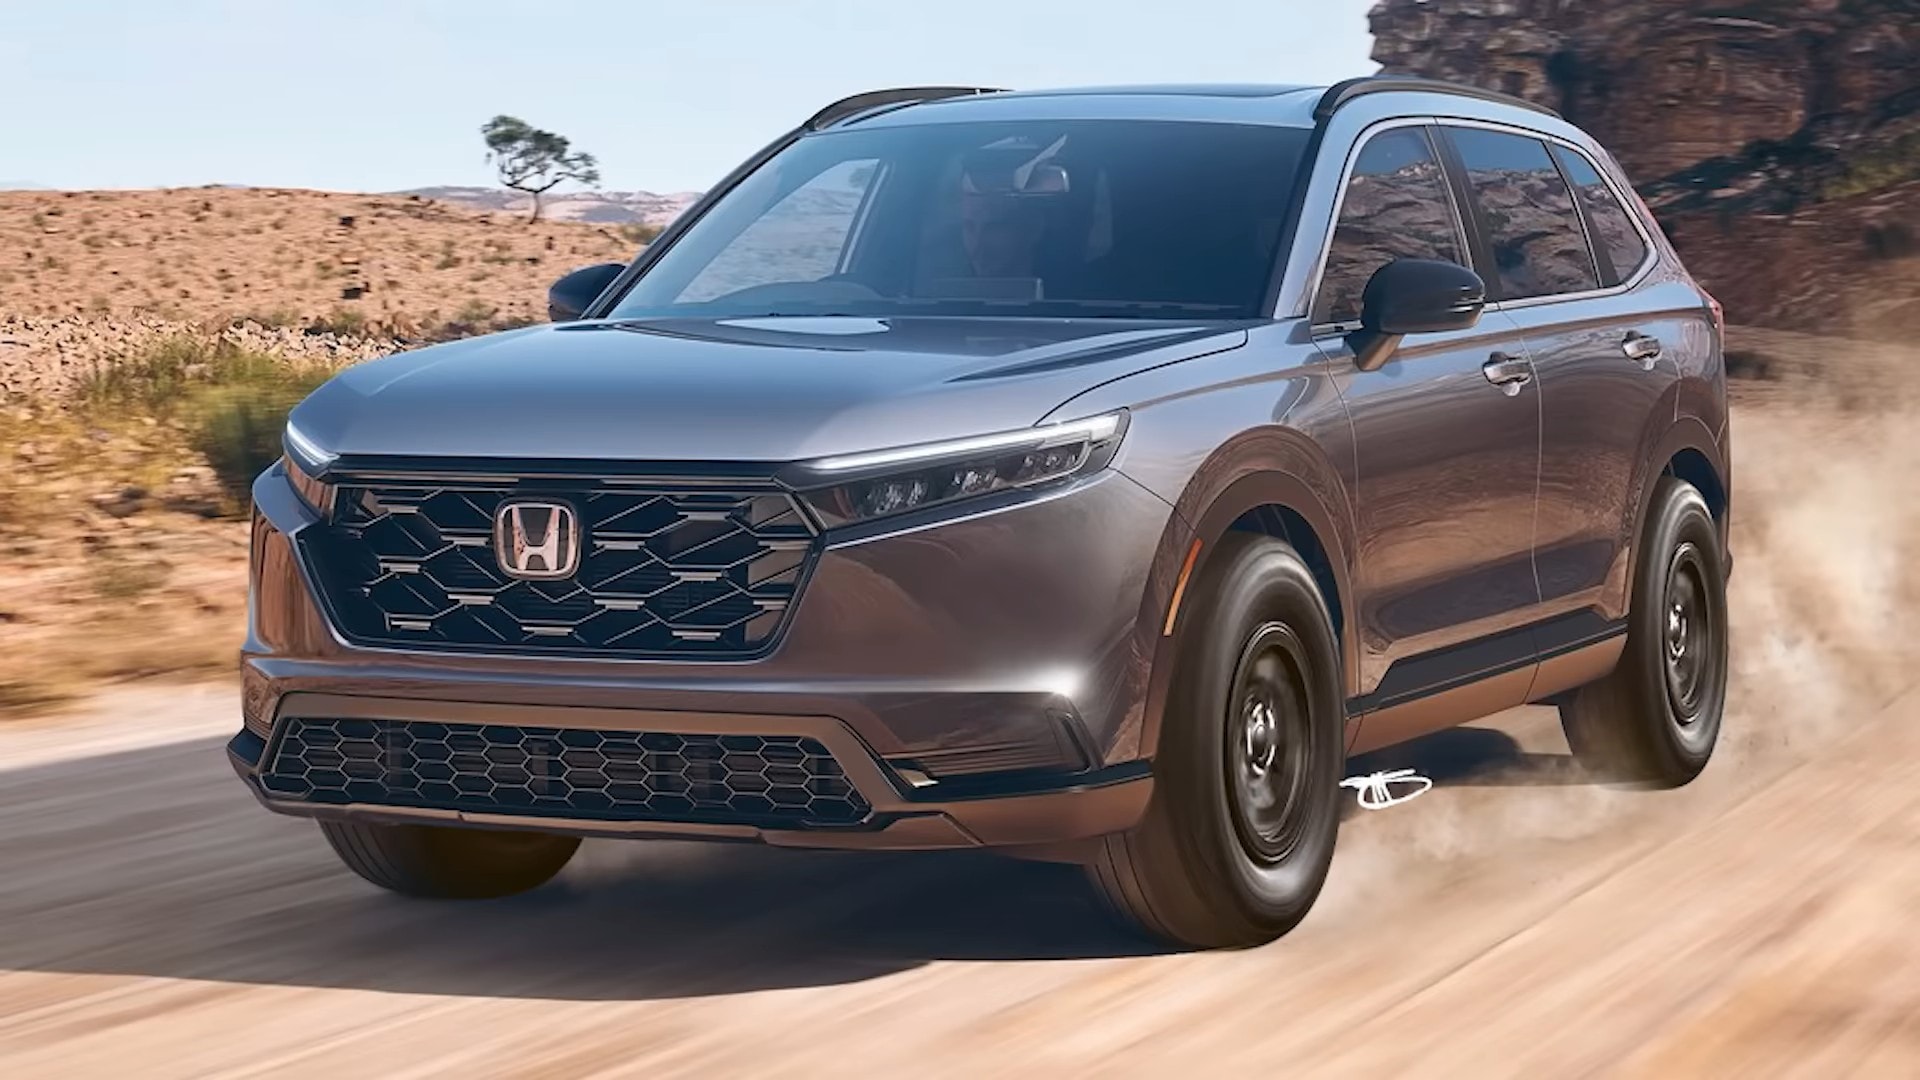 AllNew 2023 Honda CRV Is Treated as a Mere Facelift, Gets Rugged CGI